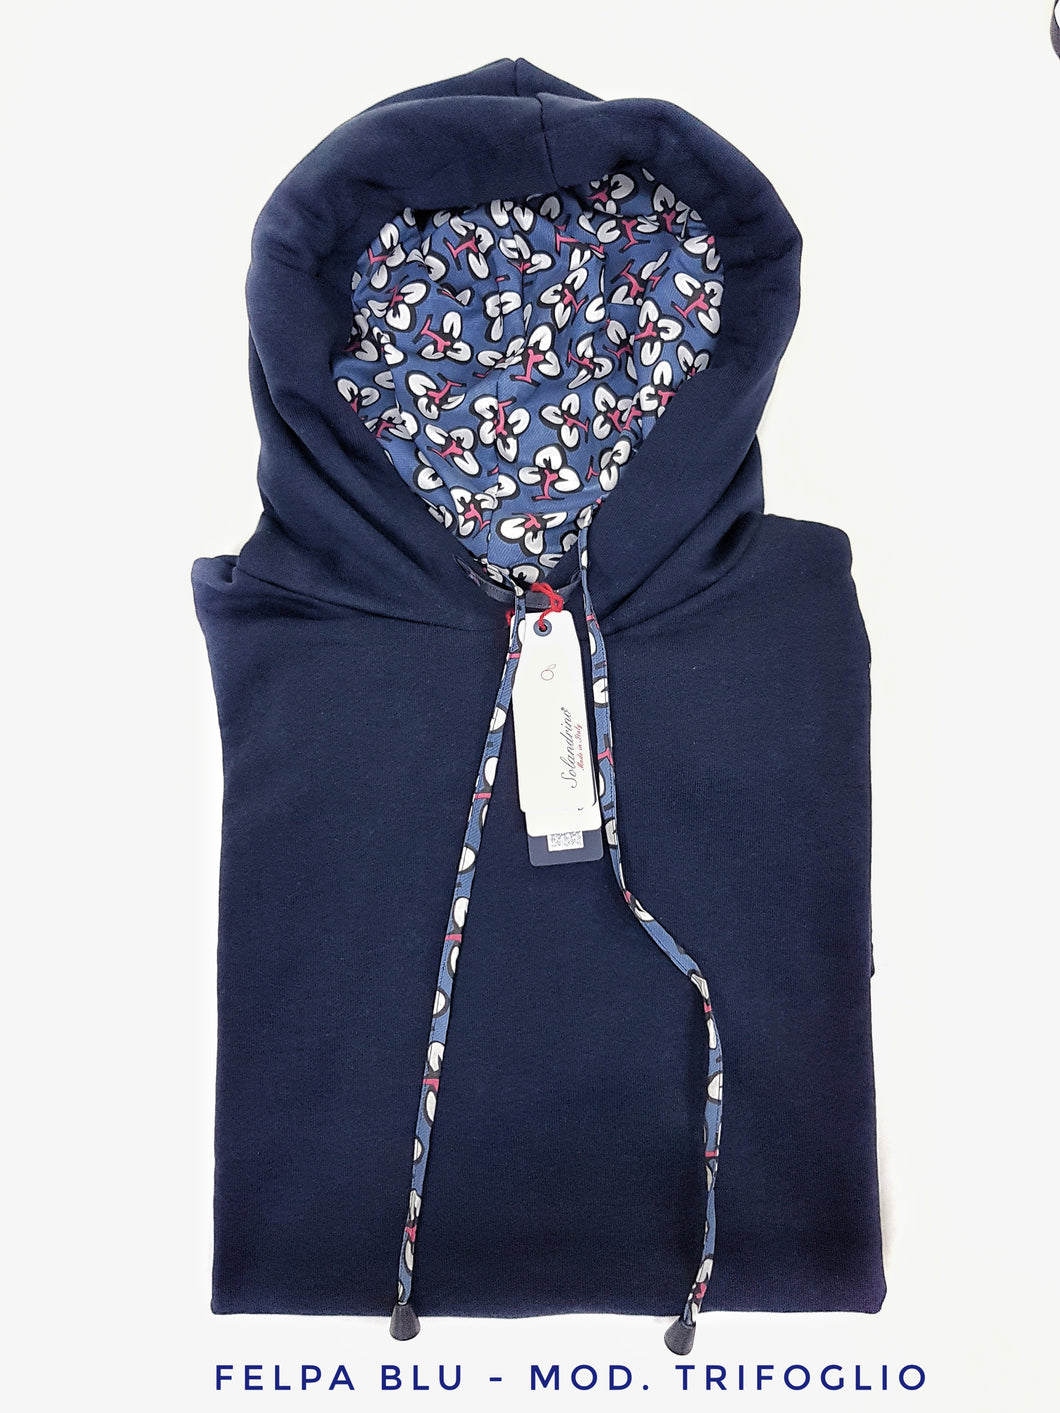 Felpa Blu con Cappuccio Design trifoglio made in Italy Fantasia 100% cotone -  Unisex Sweatshirt Blue Hoodie